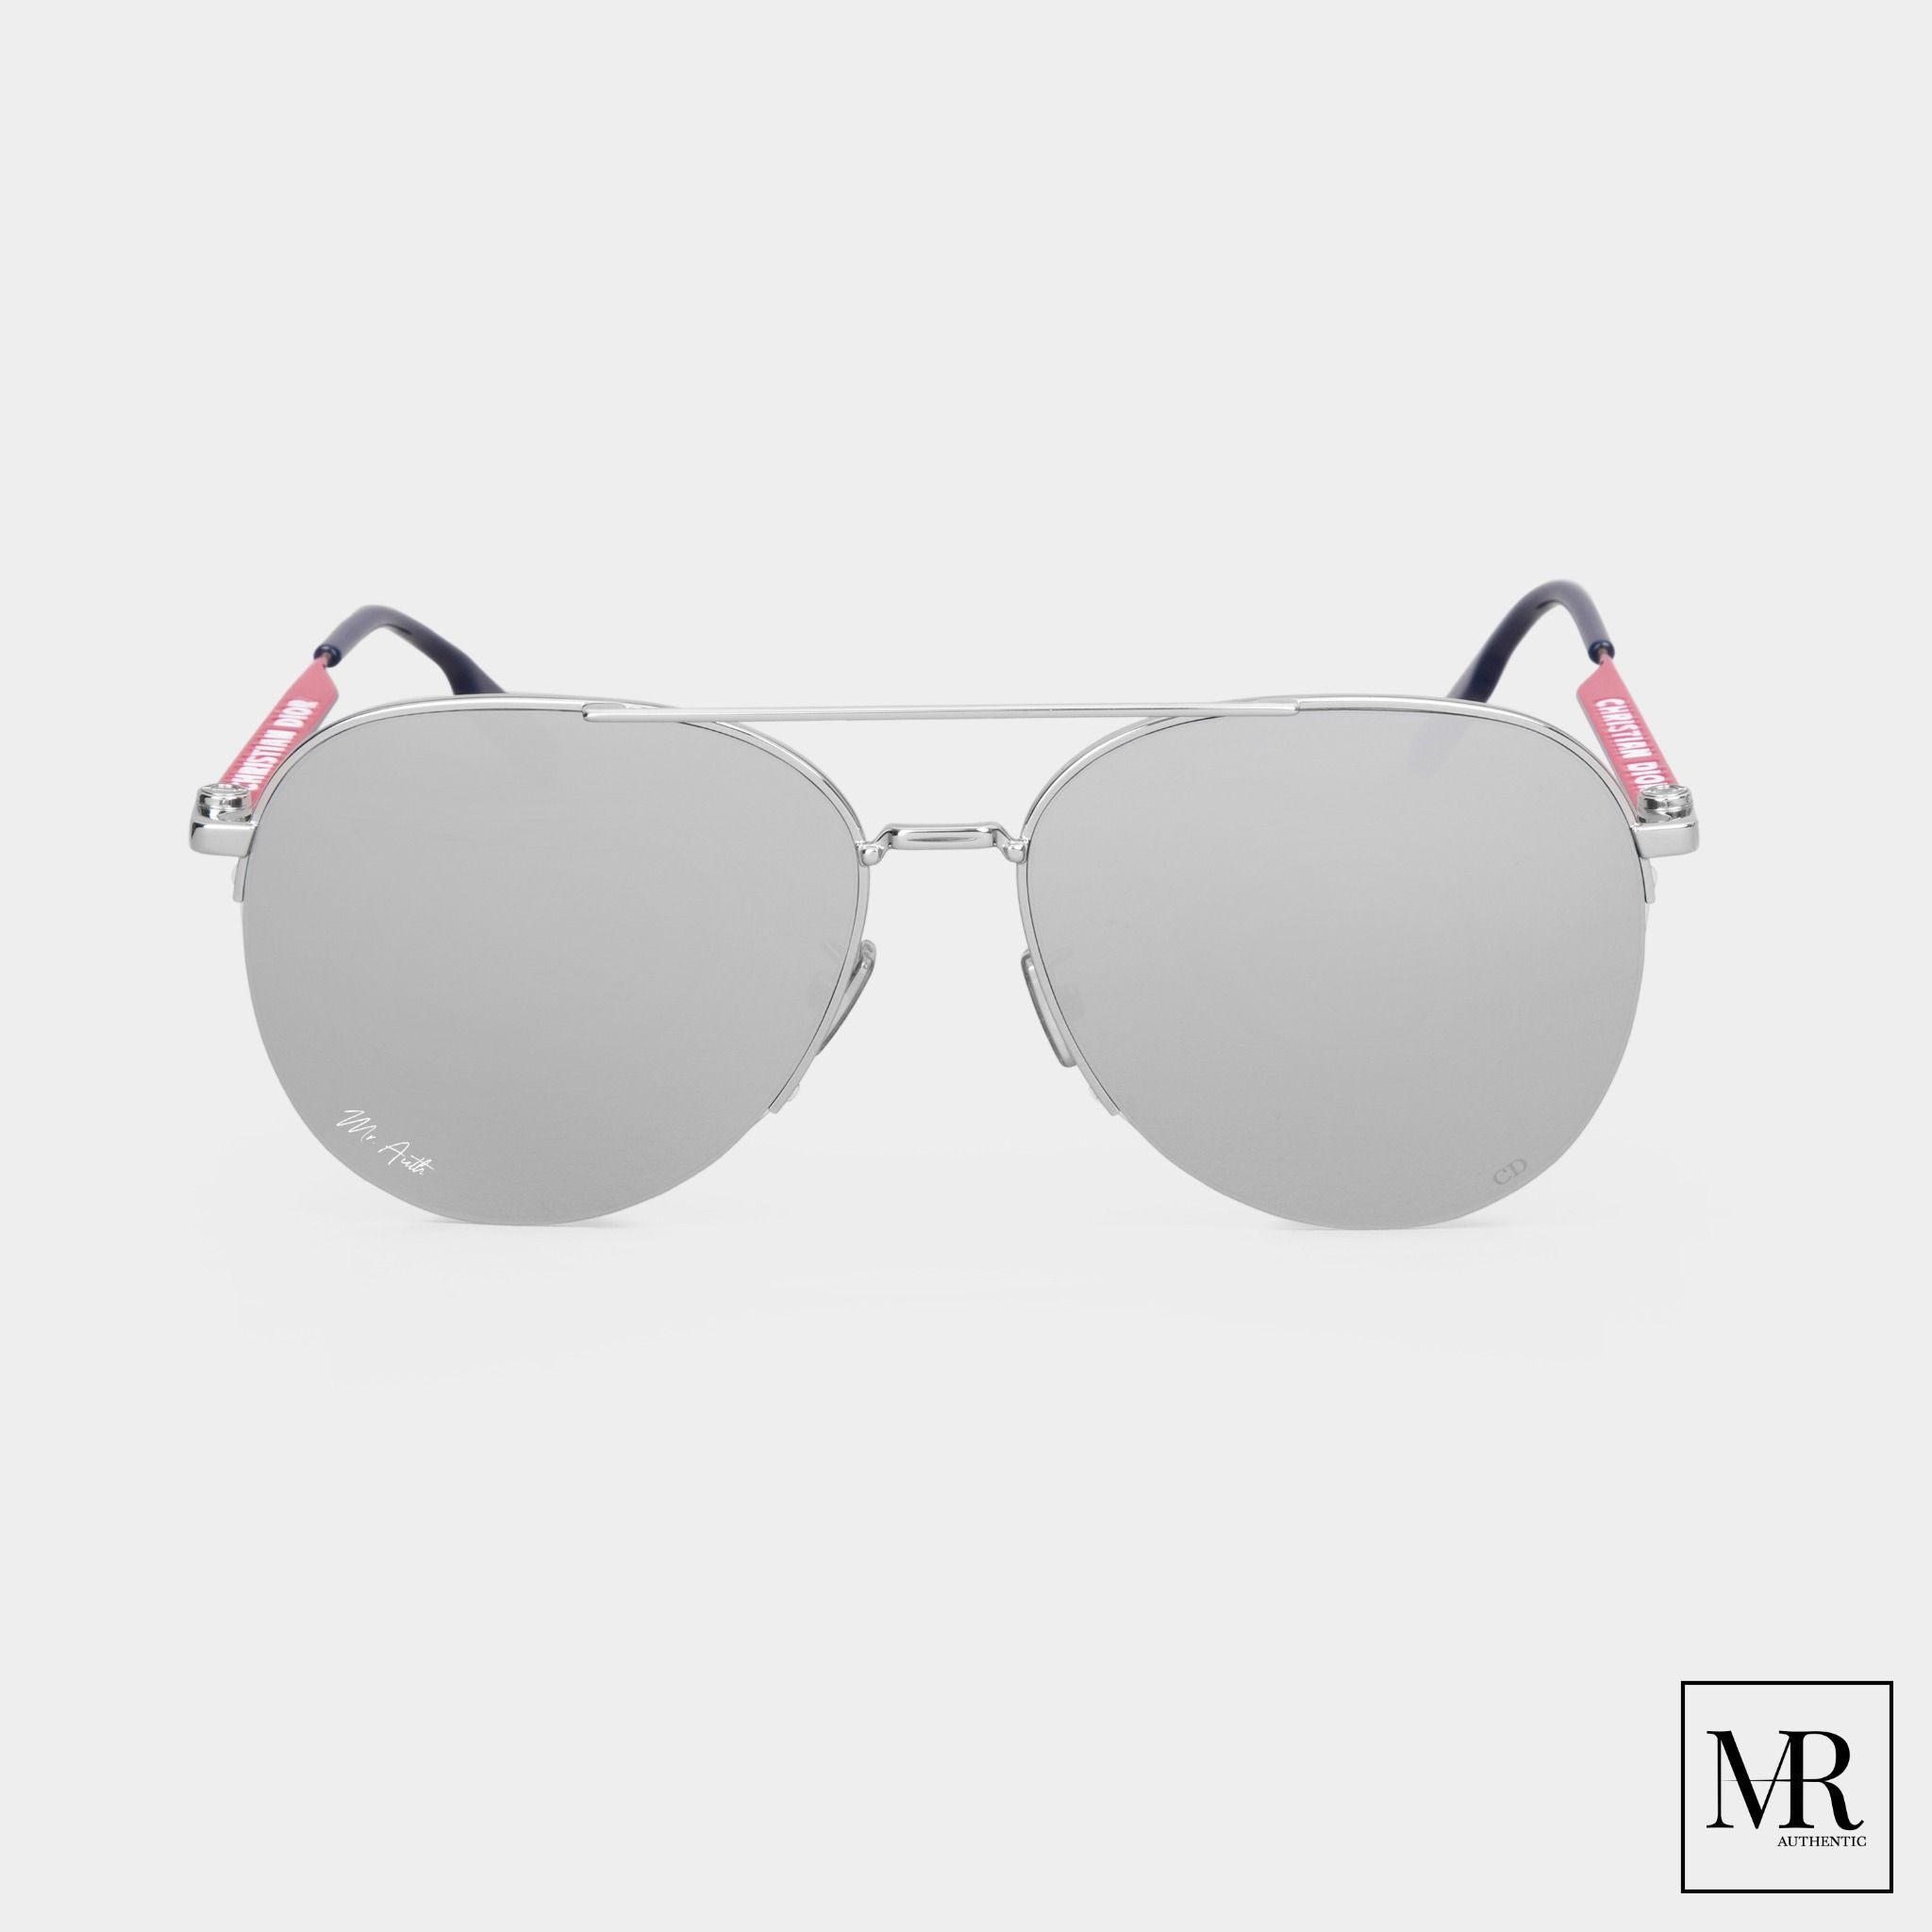 Designer Sunglasses for Women  Aviator Round Square  Cat Eye  DIOR US